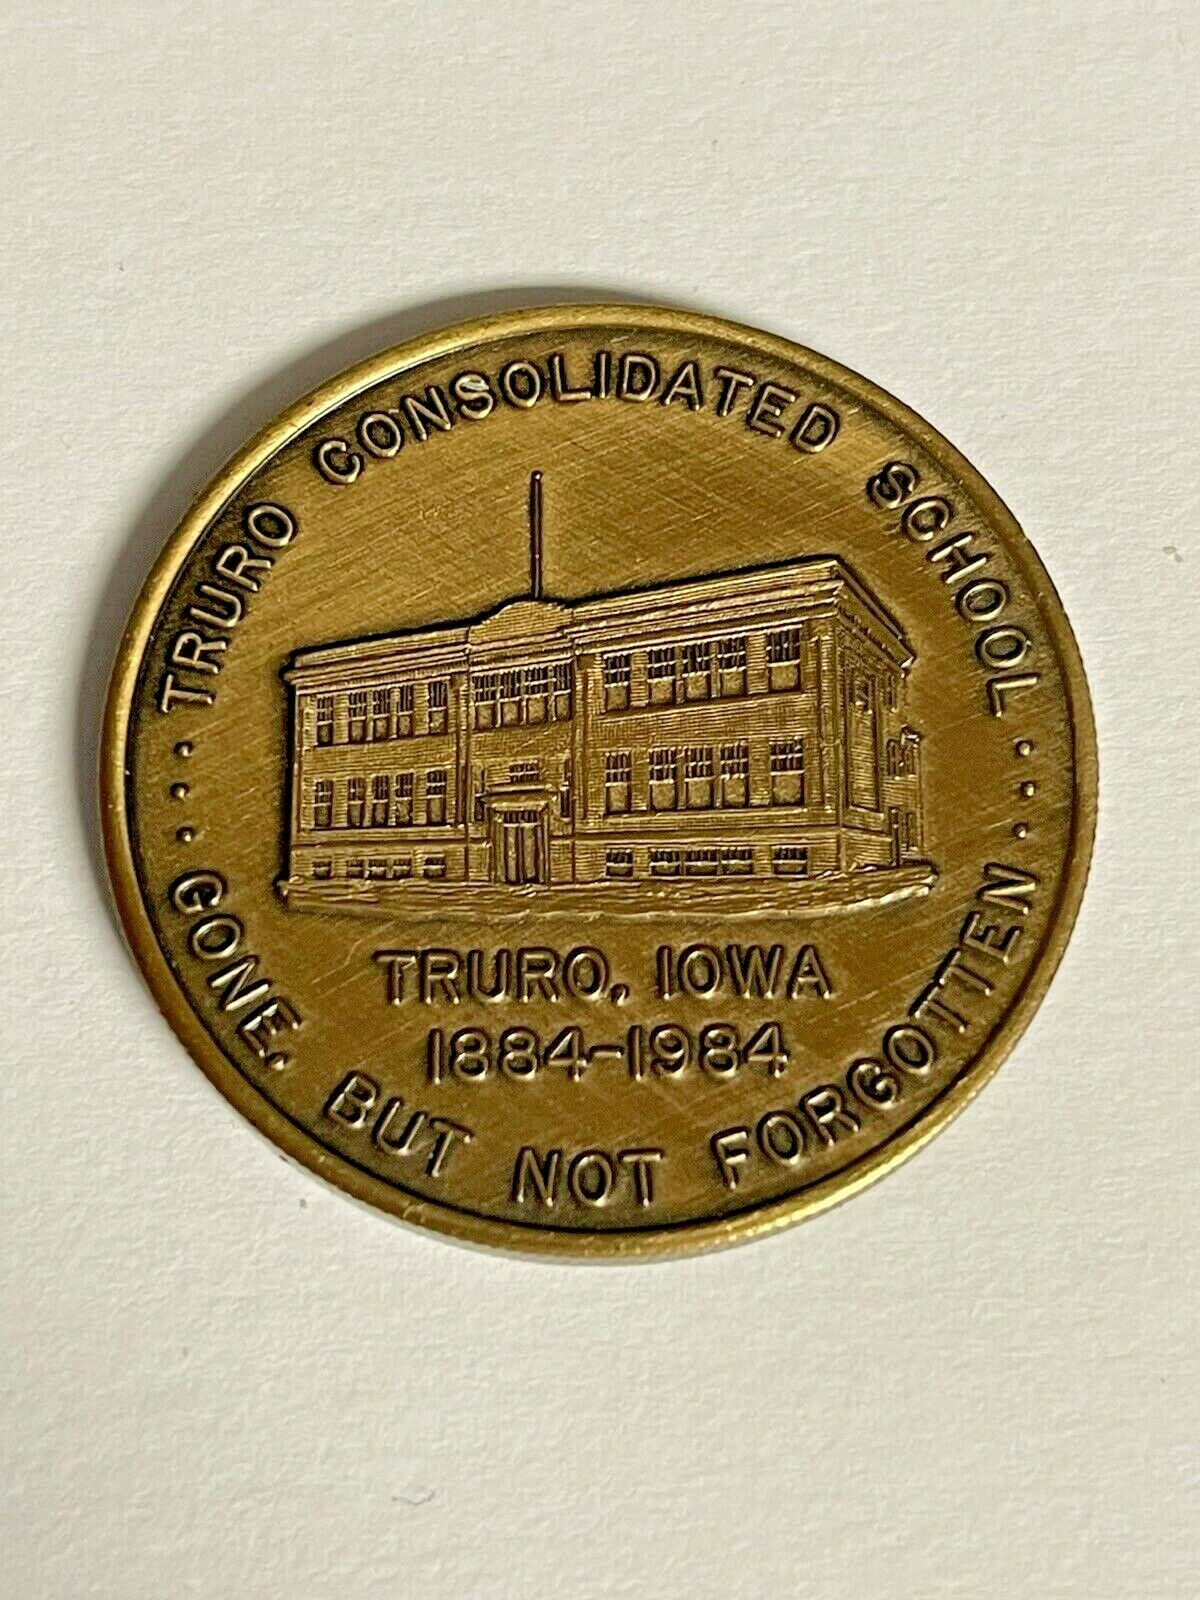 Truro Iowa Token 1884 1984 Consolidated School Commemoration Brass Coin